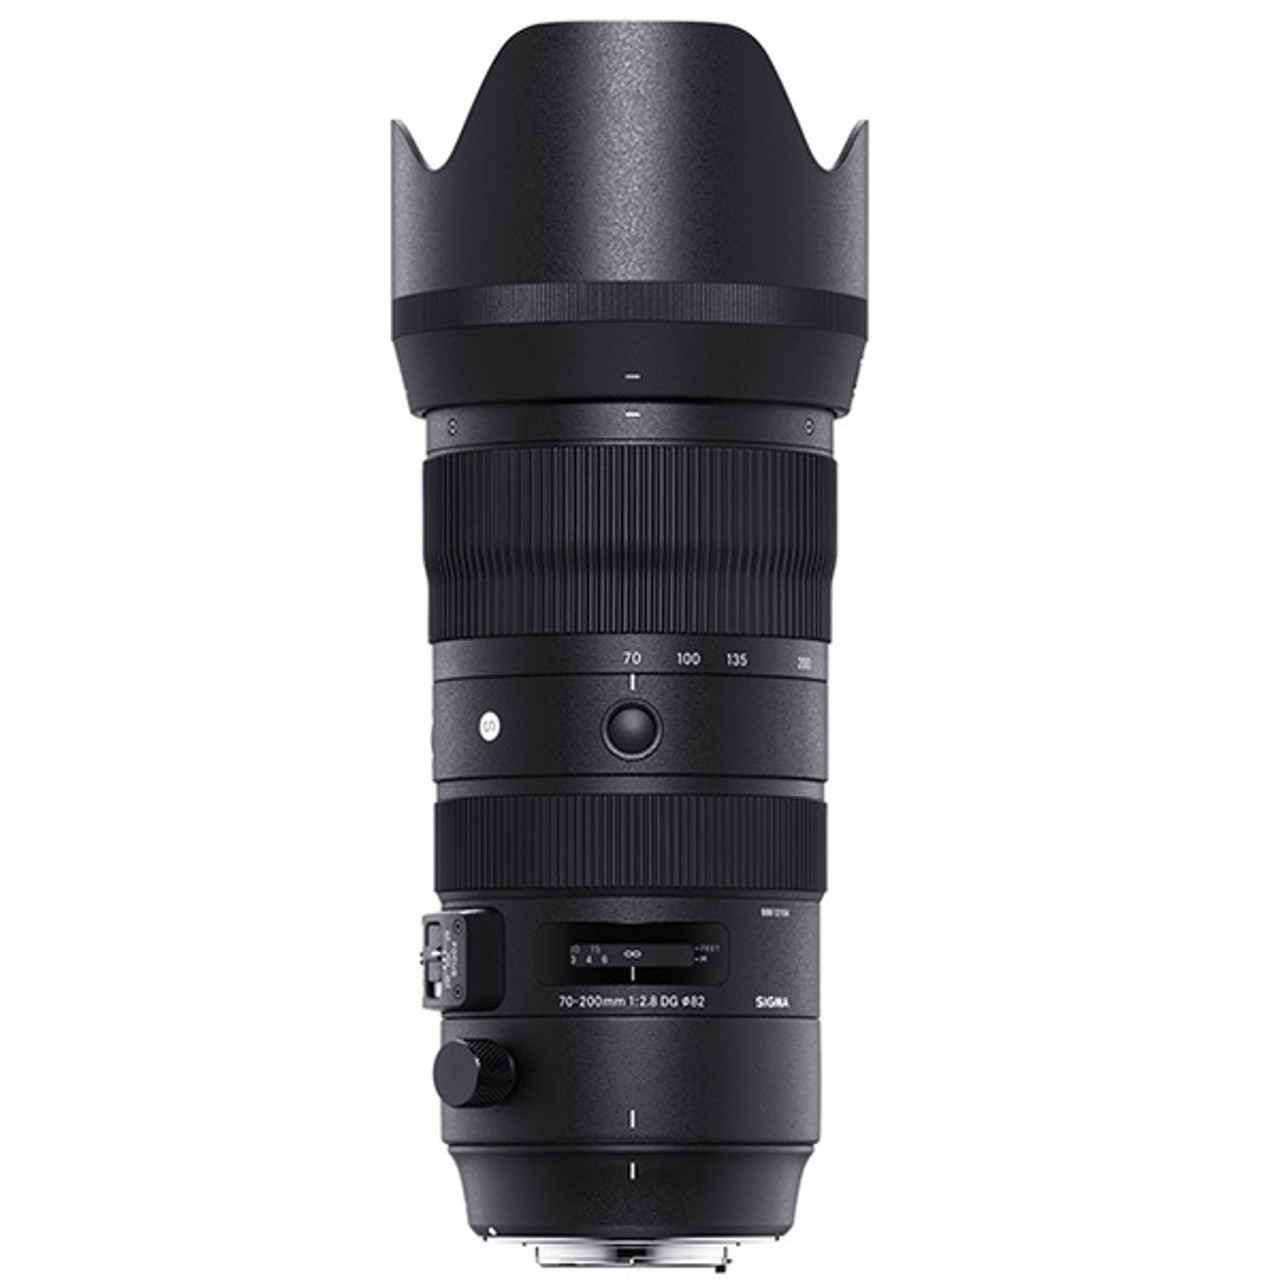 Sigma 70-200mm F2.8 DG OS HSM Sport (Canon)